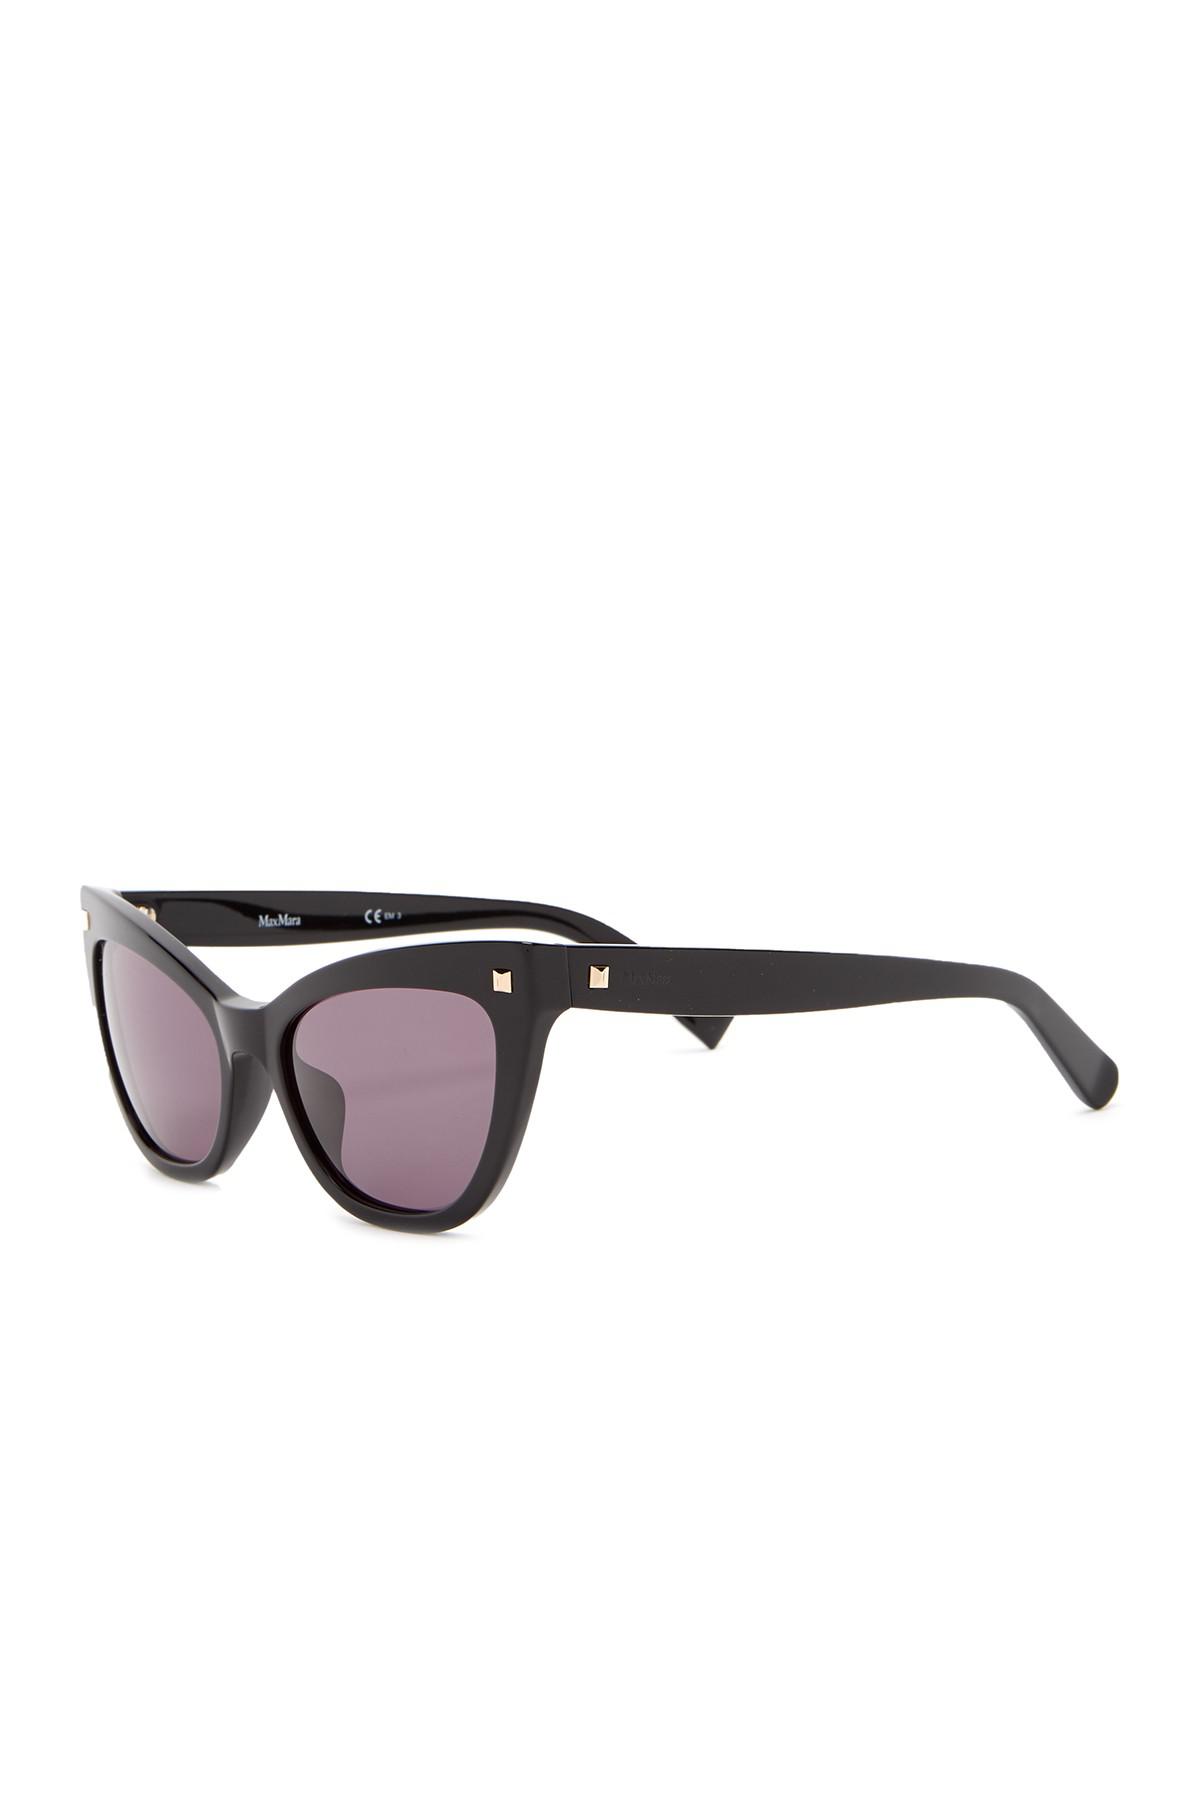 Max Mara Fifties 54mm Cat Eye Sunglasses in Brown | Lyst